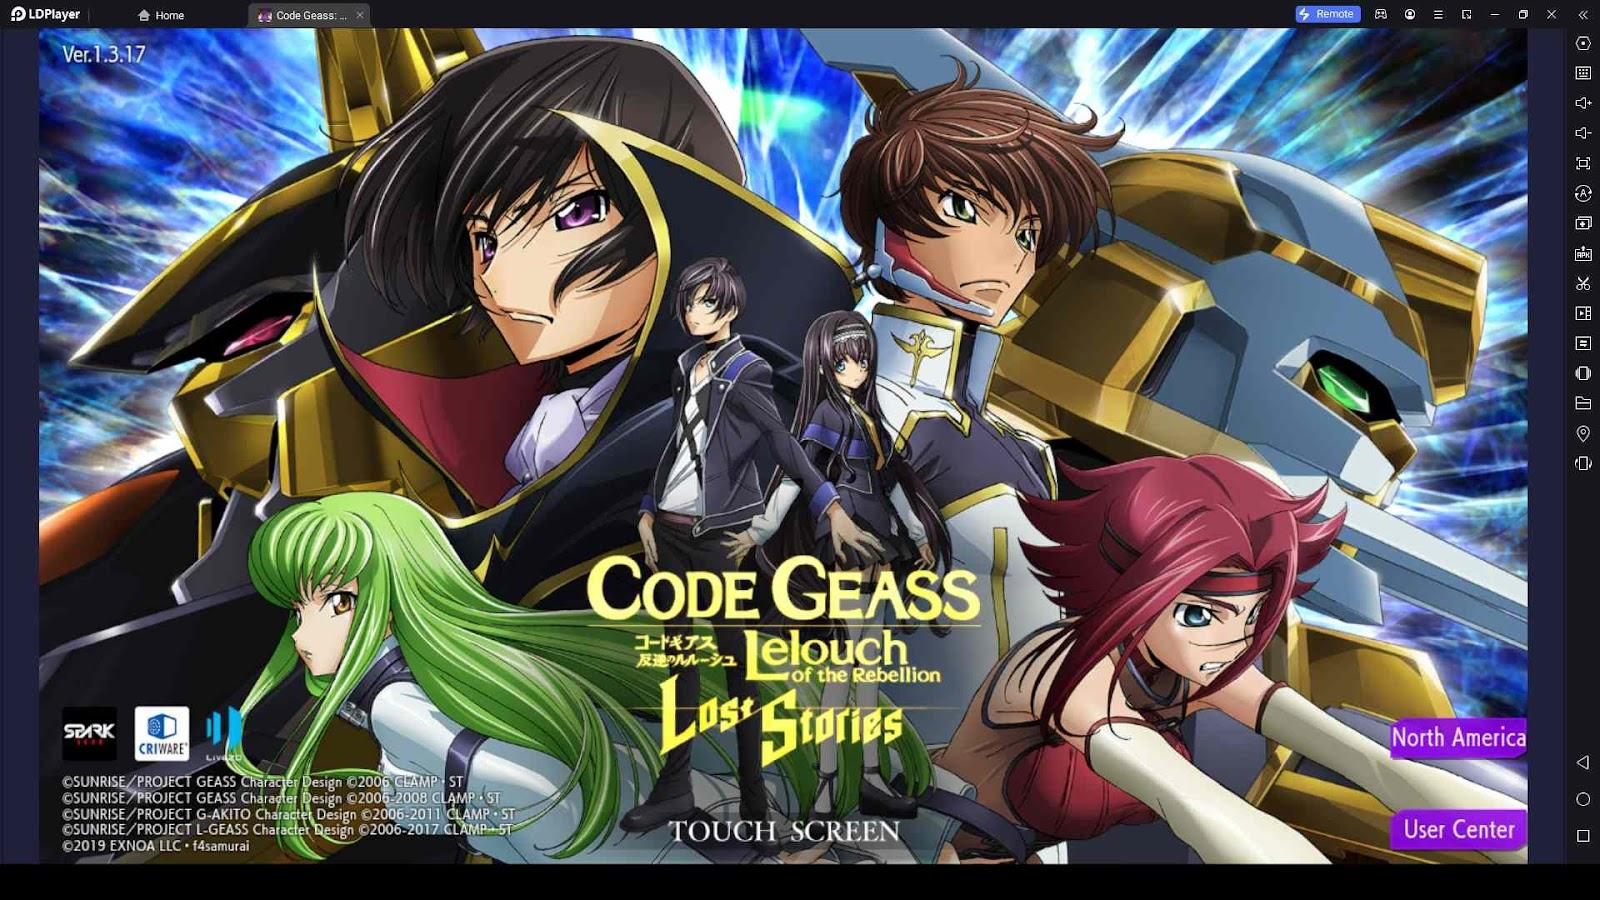 Code Geass: Lost Stories Reroll Guide